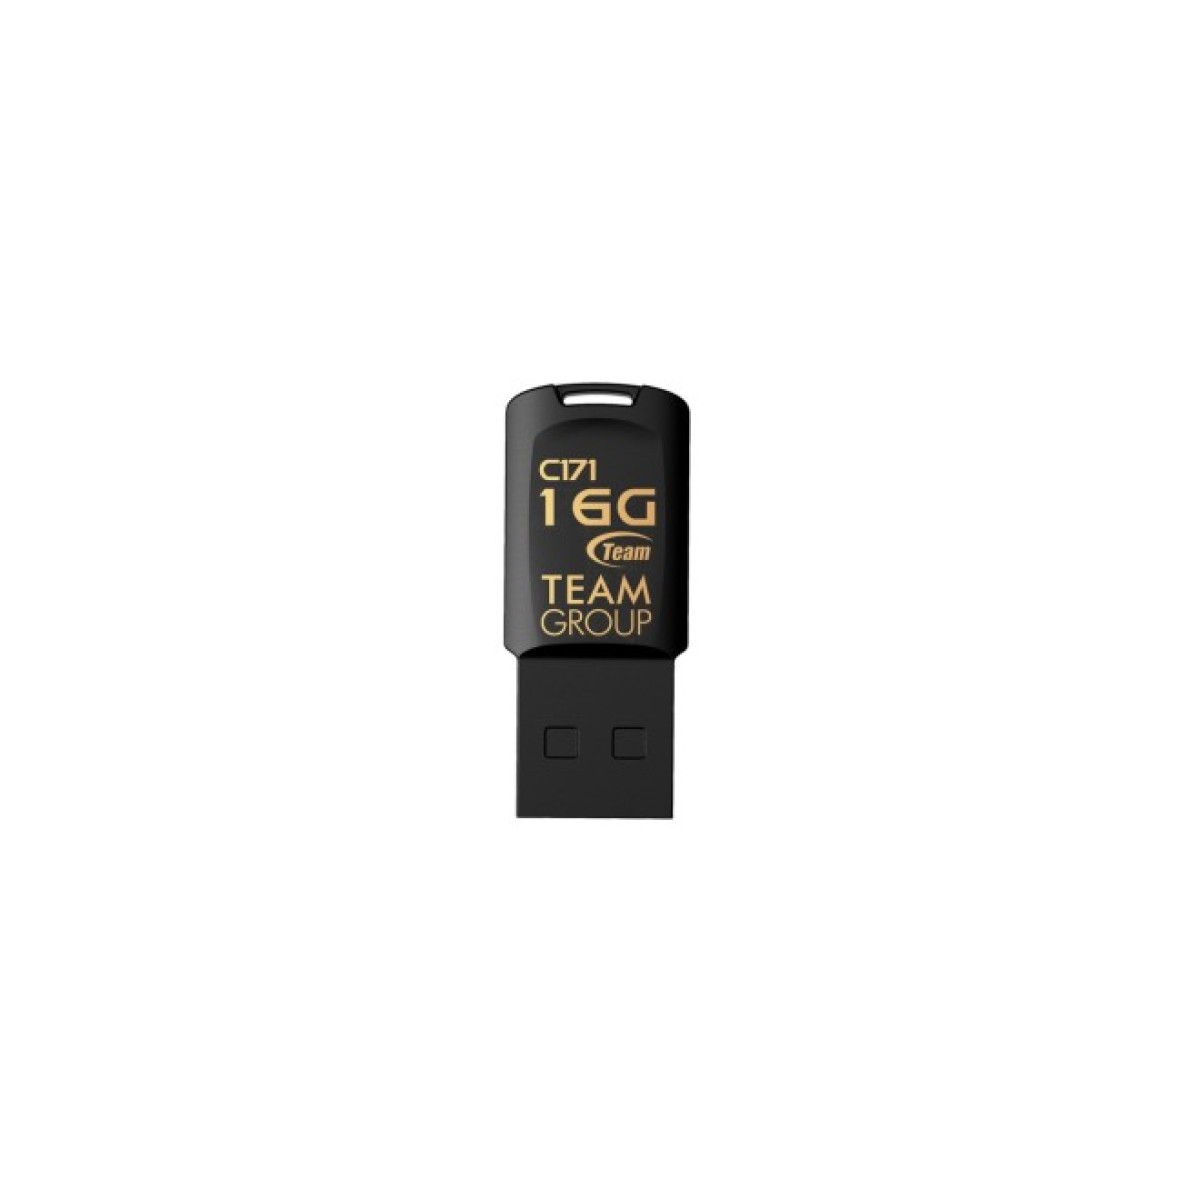 USB флеш накопитель Team 16GB C171 Black USB 2.0 (TC17116GB01) 98_98.jpg - фото 1